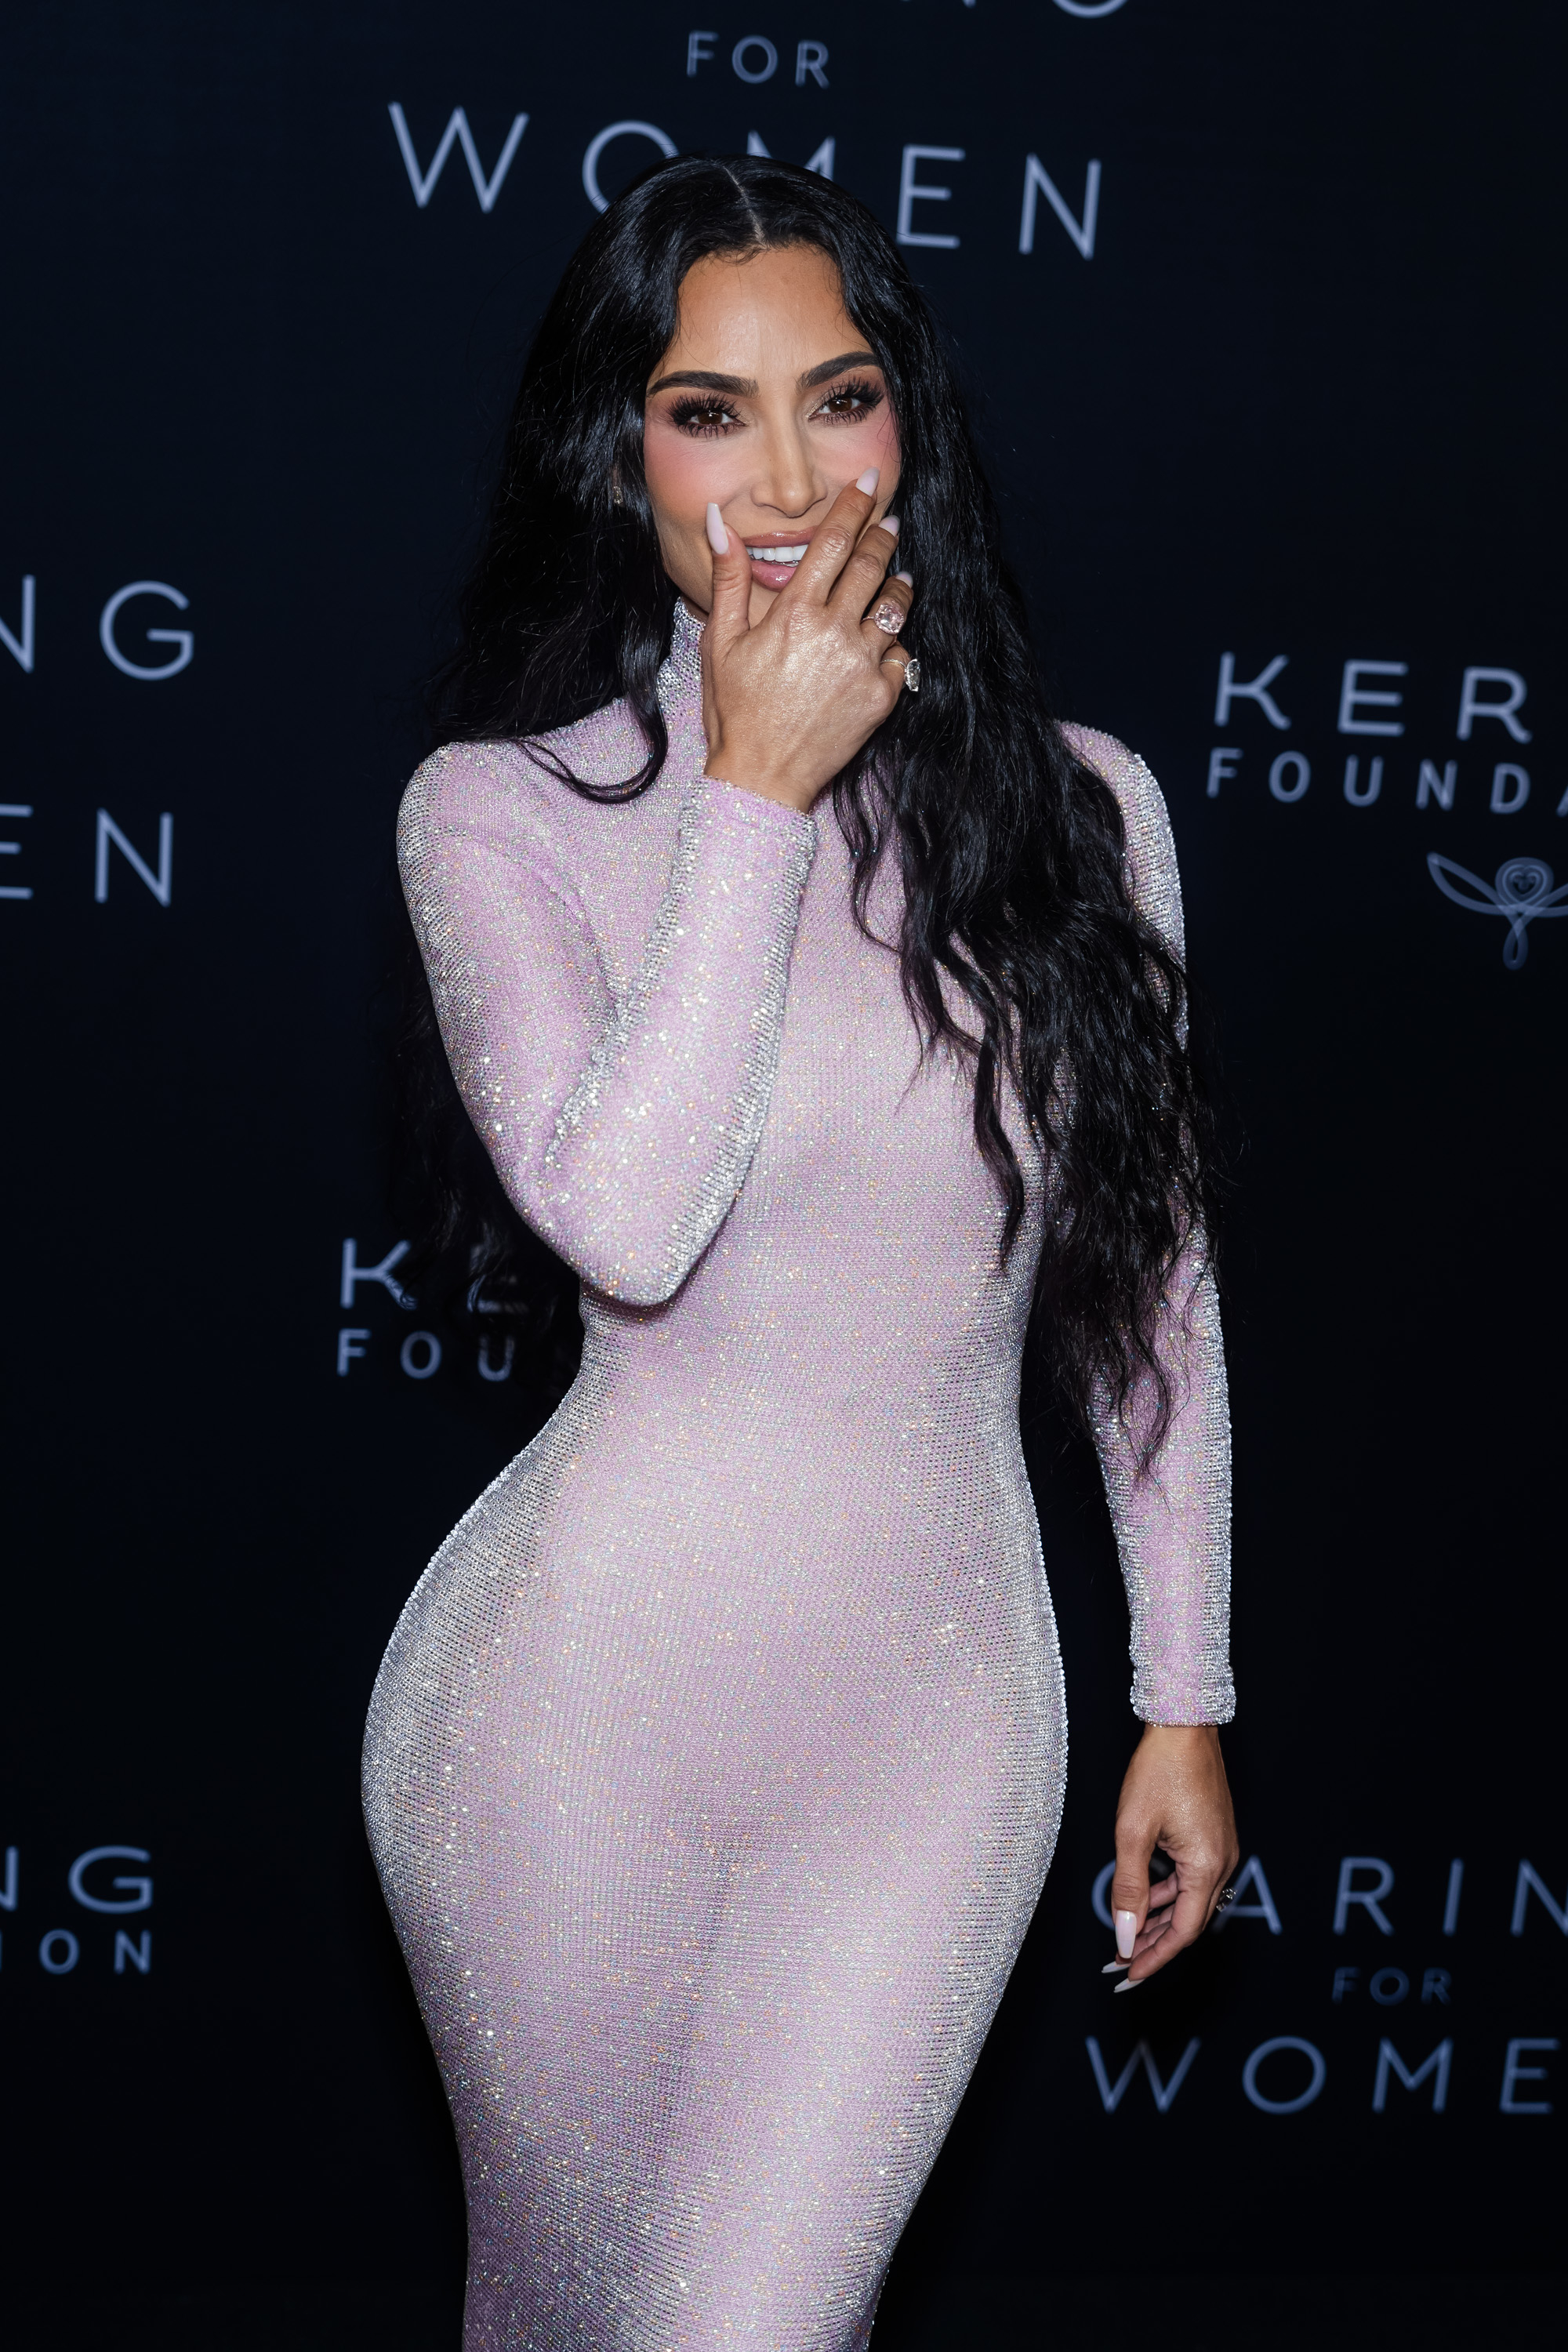 Kim Kardashian Reveals Secret Tattoo She Got After Hosting SNL